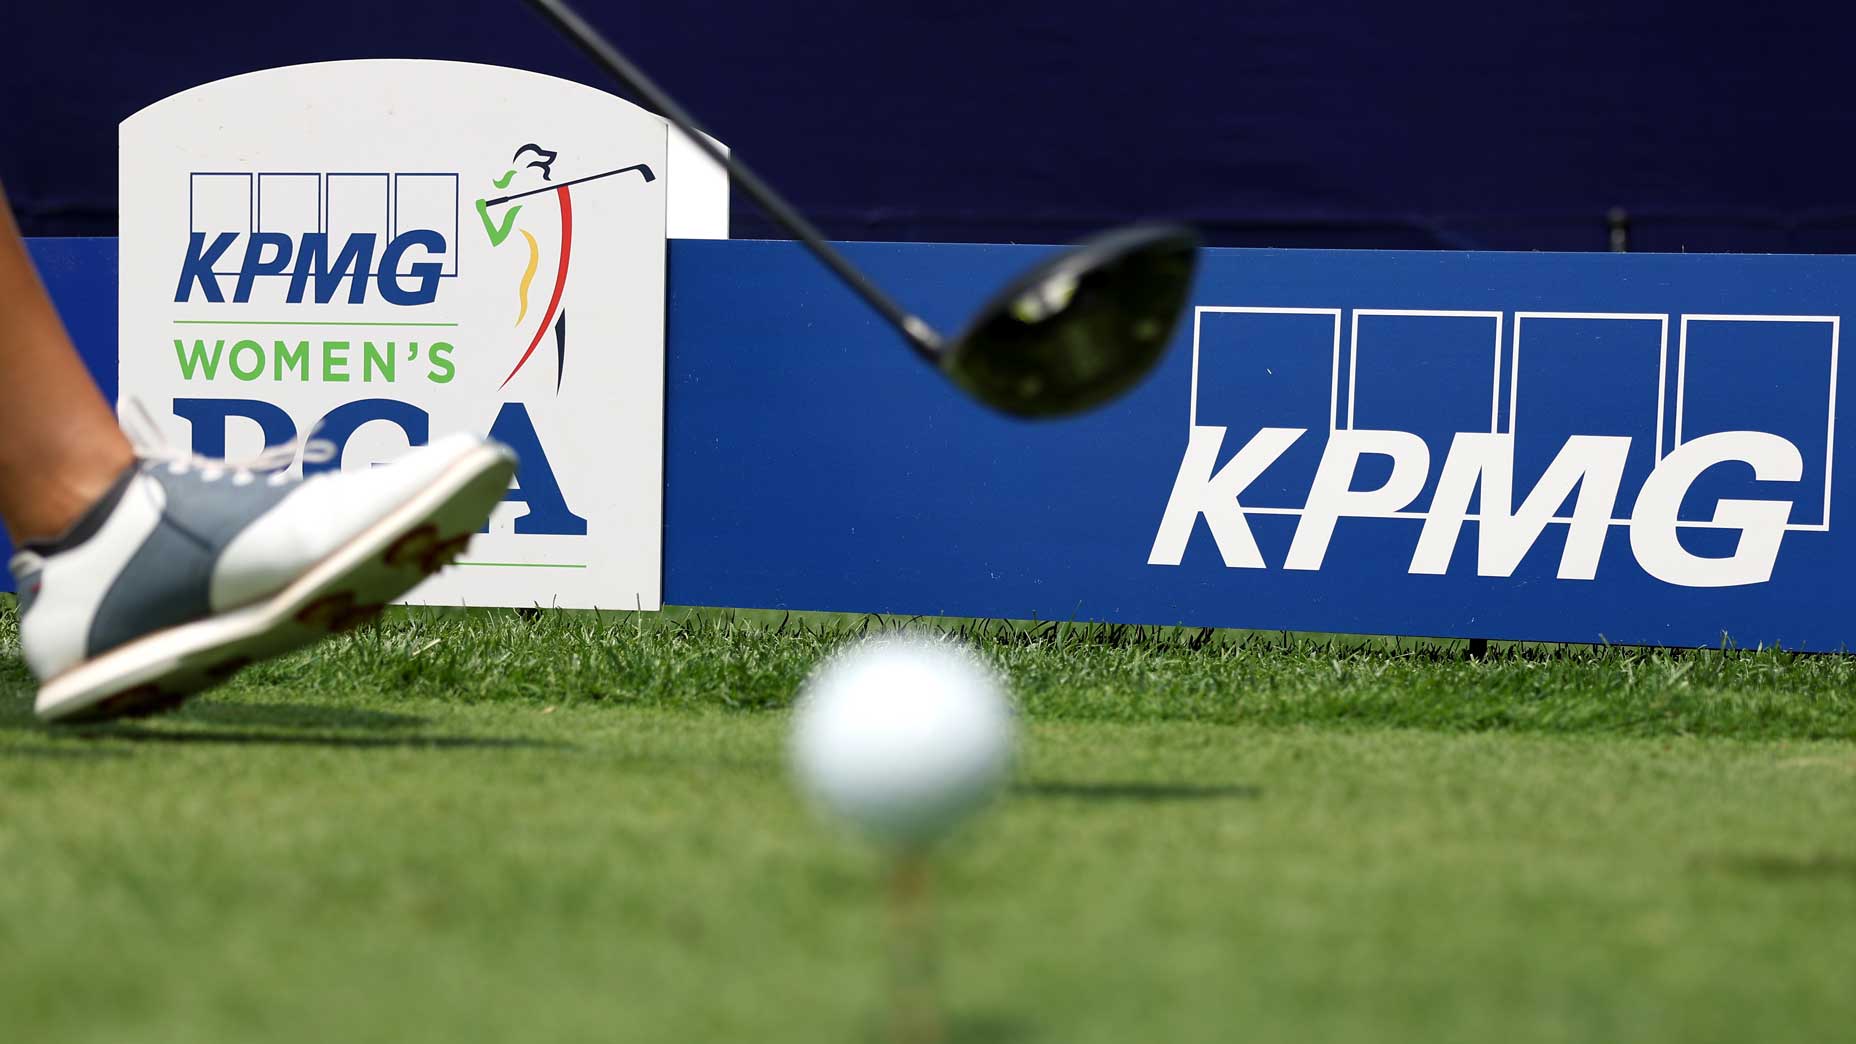 KPMG Women's PGA Championship sign next to golf ball on tee